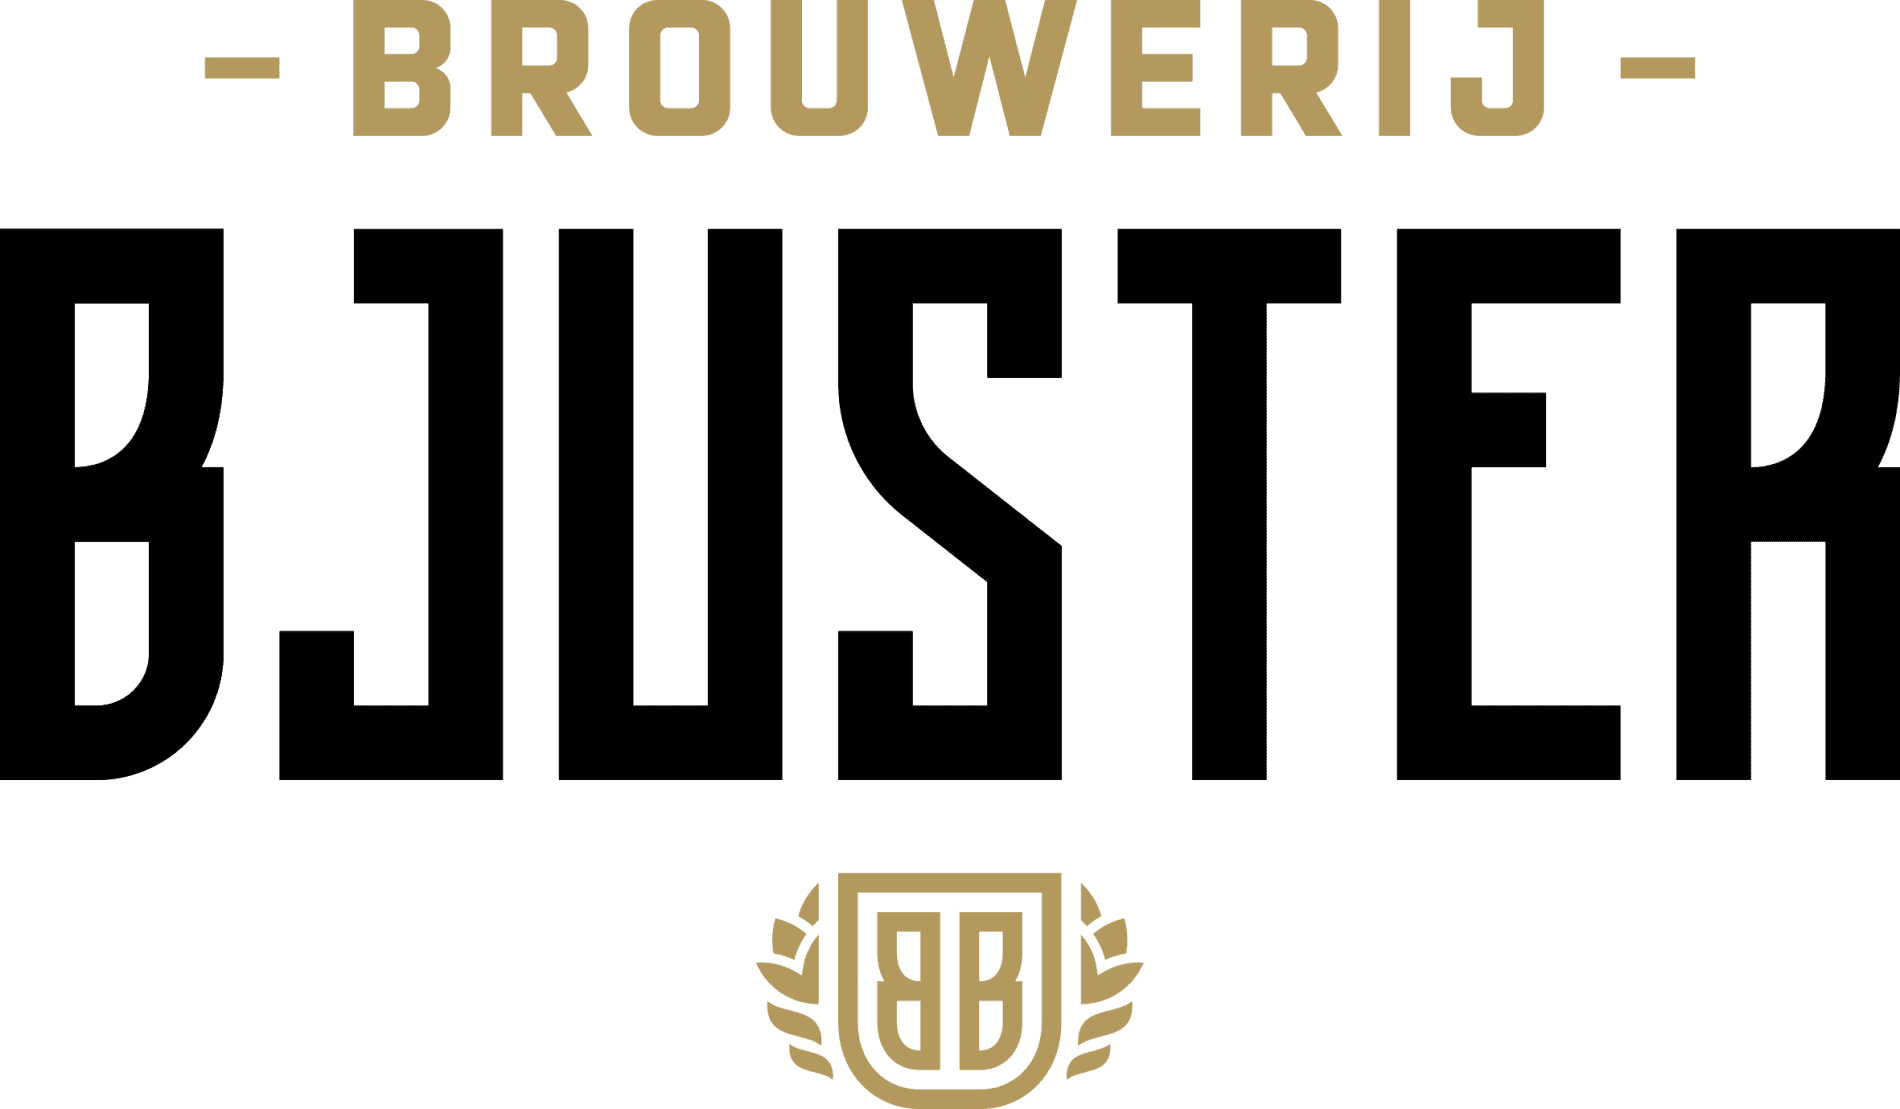 Brouwerij Bjuster